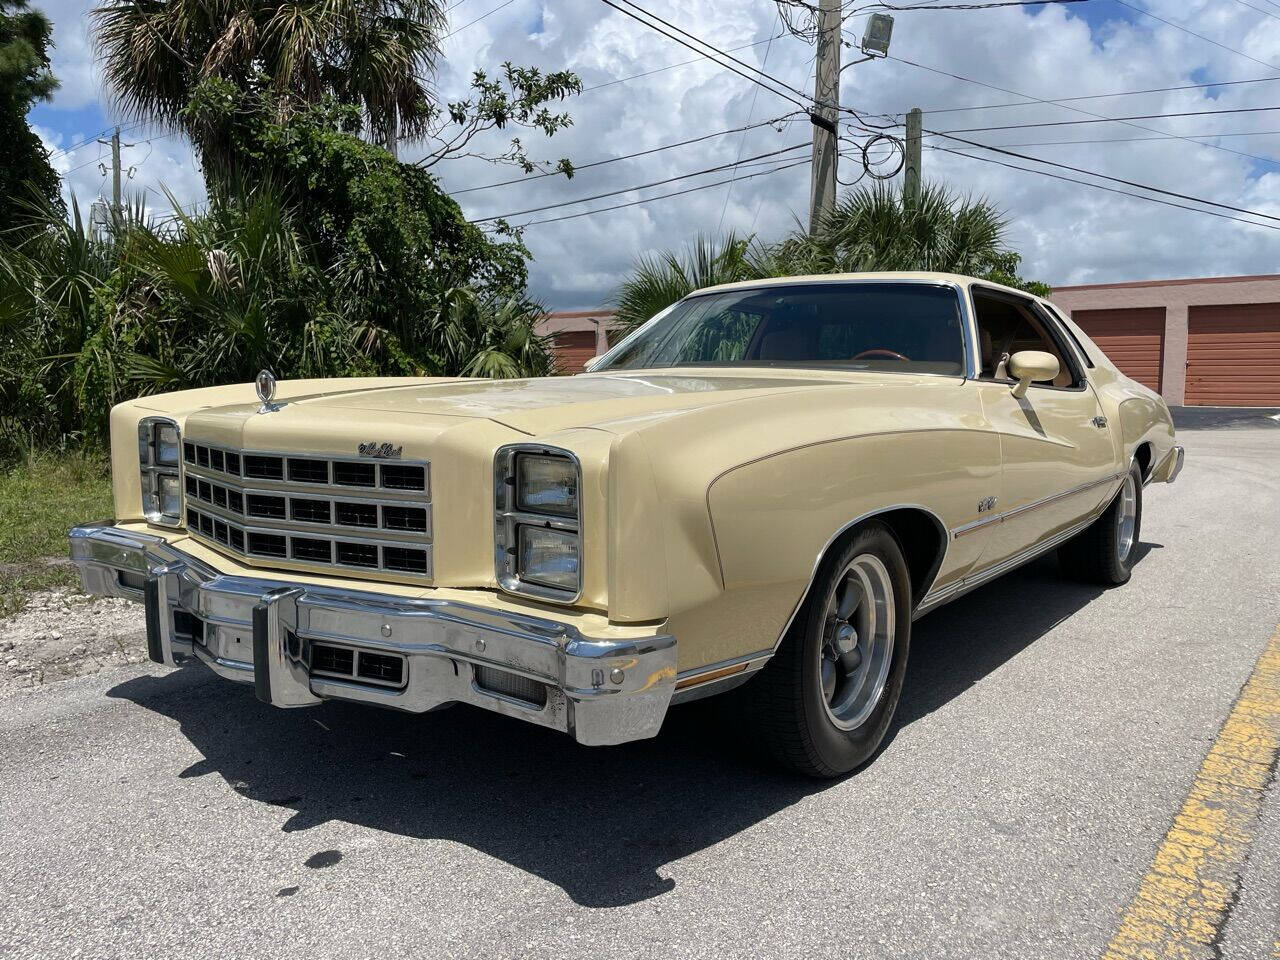 Used Chevrolet Sonic for Sale Near Me in Sarasota, FL - Autotrader